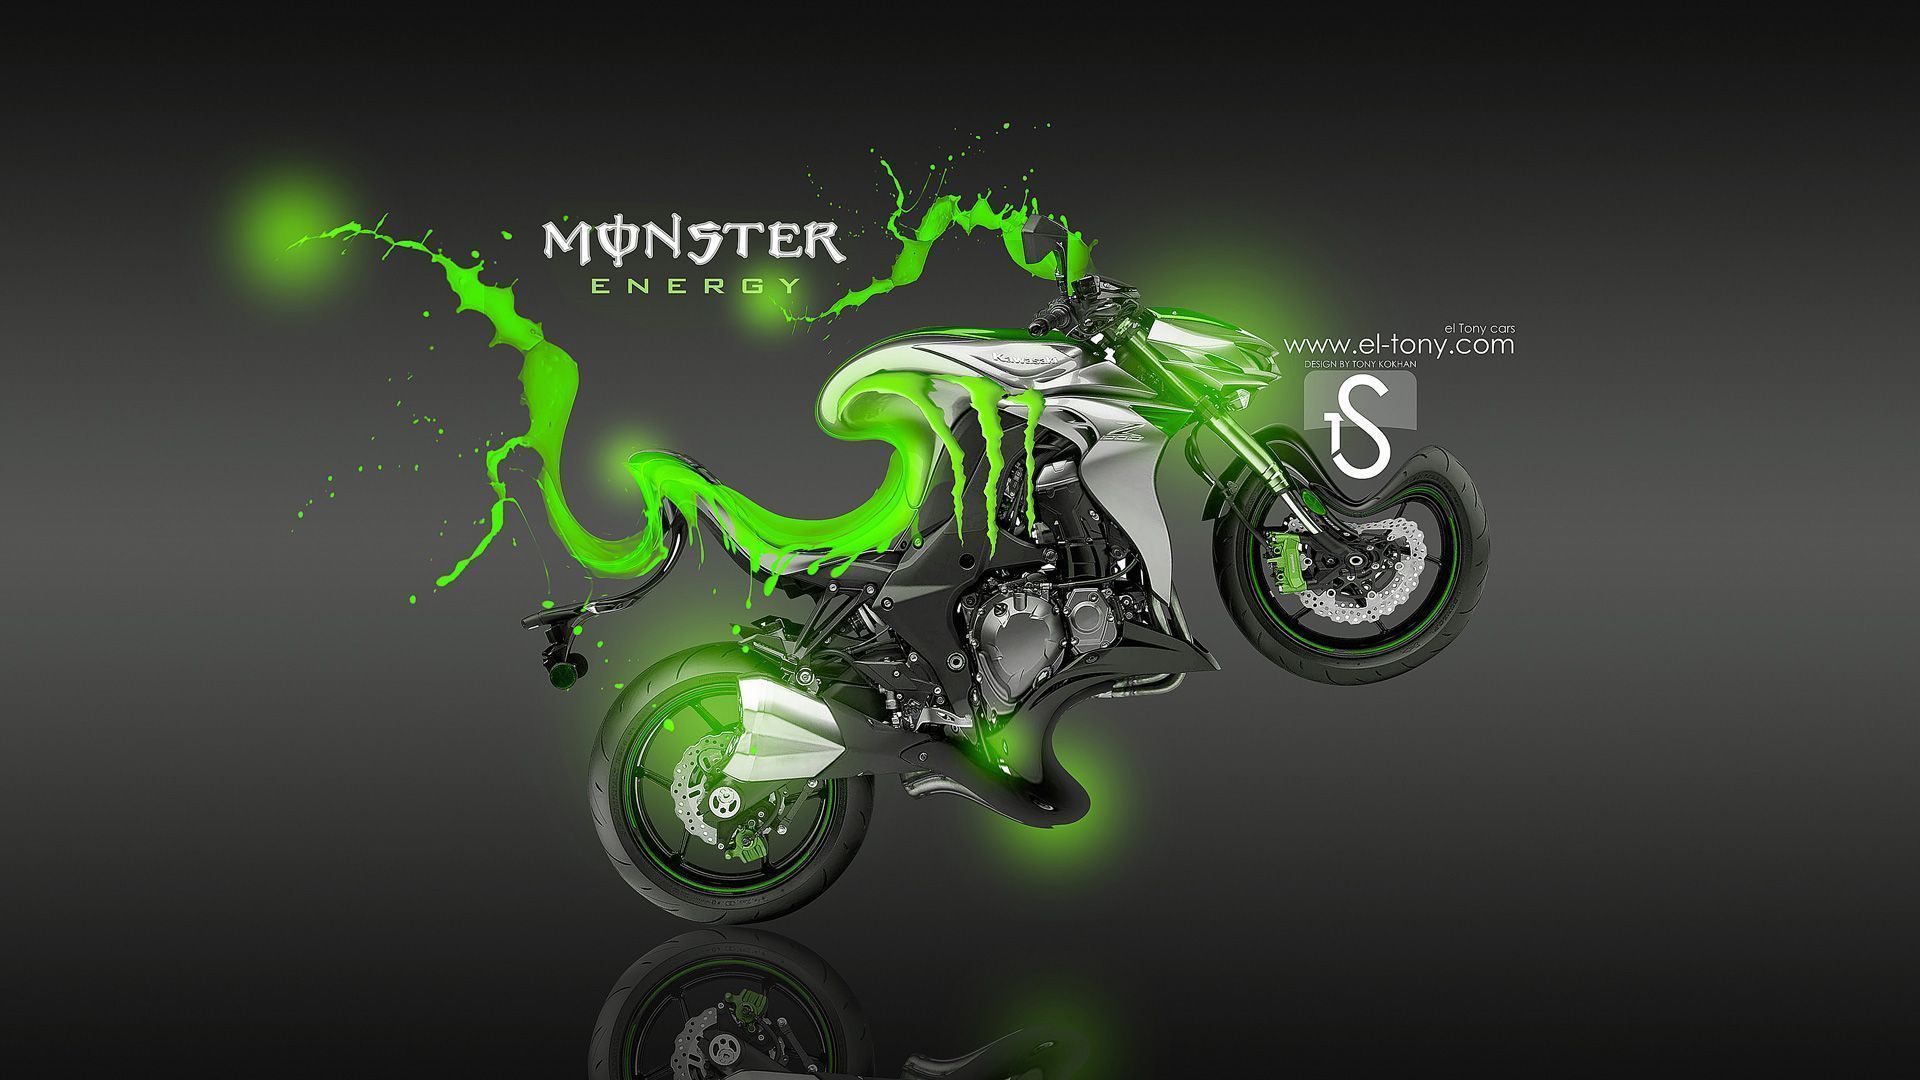 Kawasaki Logo Wallpaper Monster - image #335